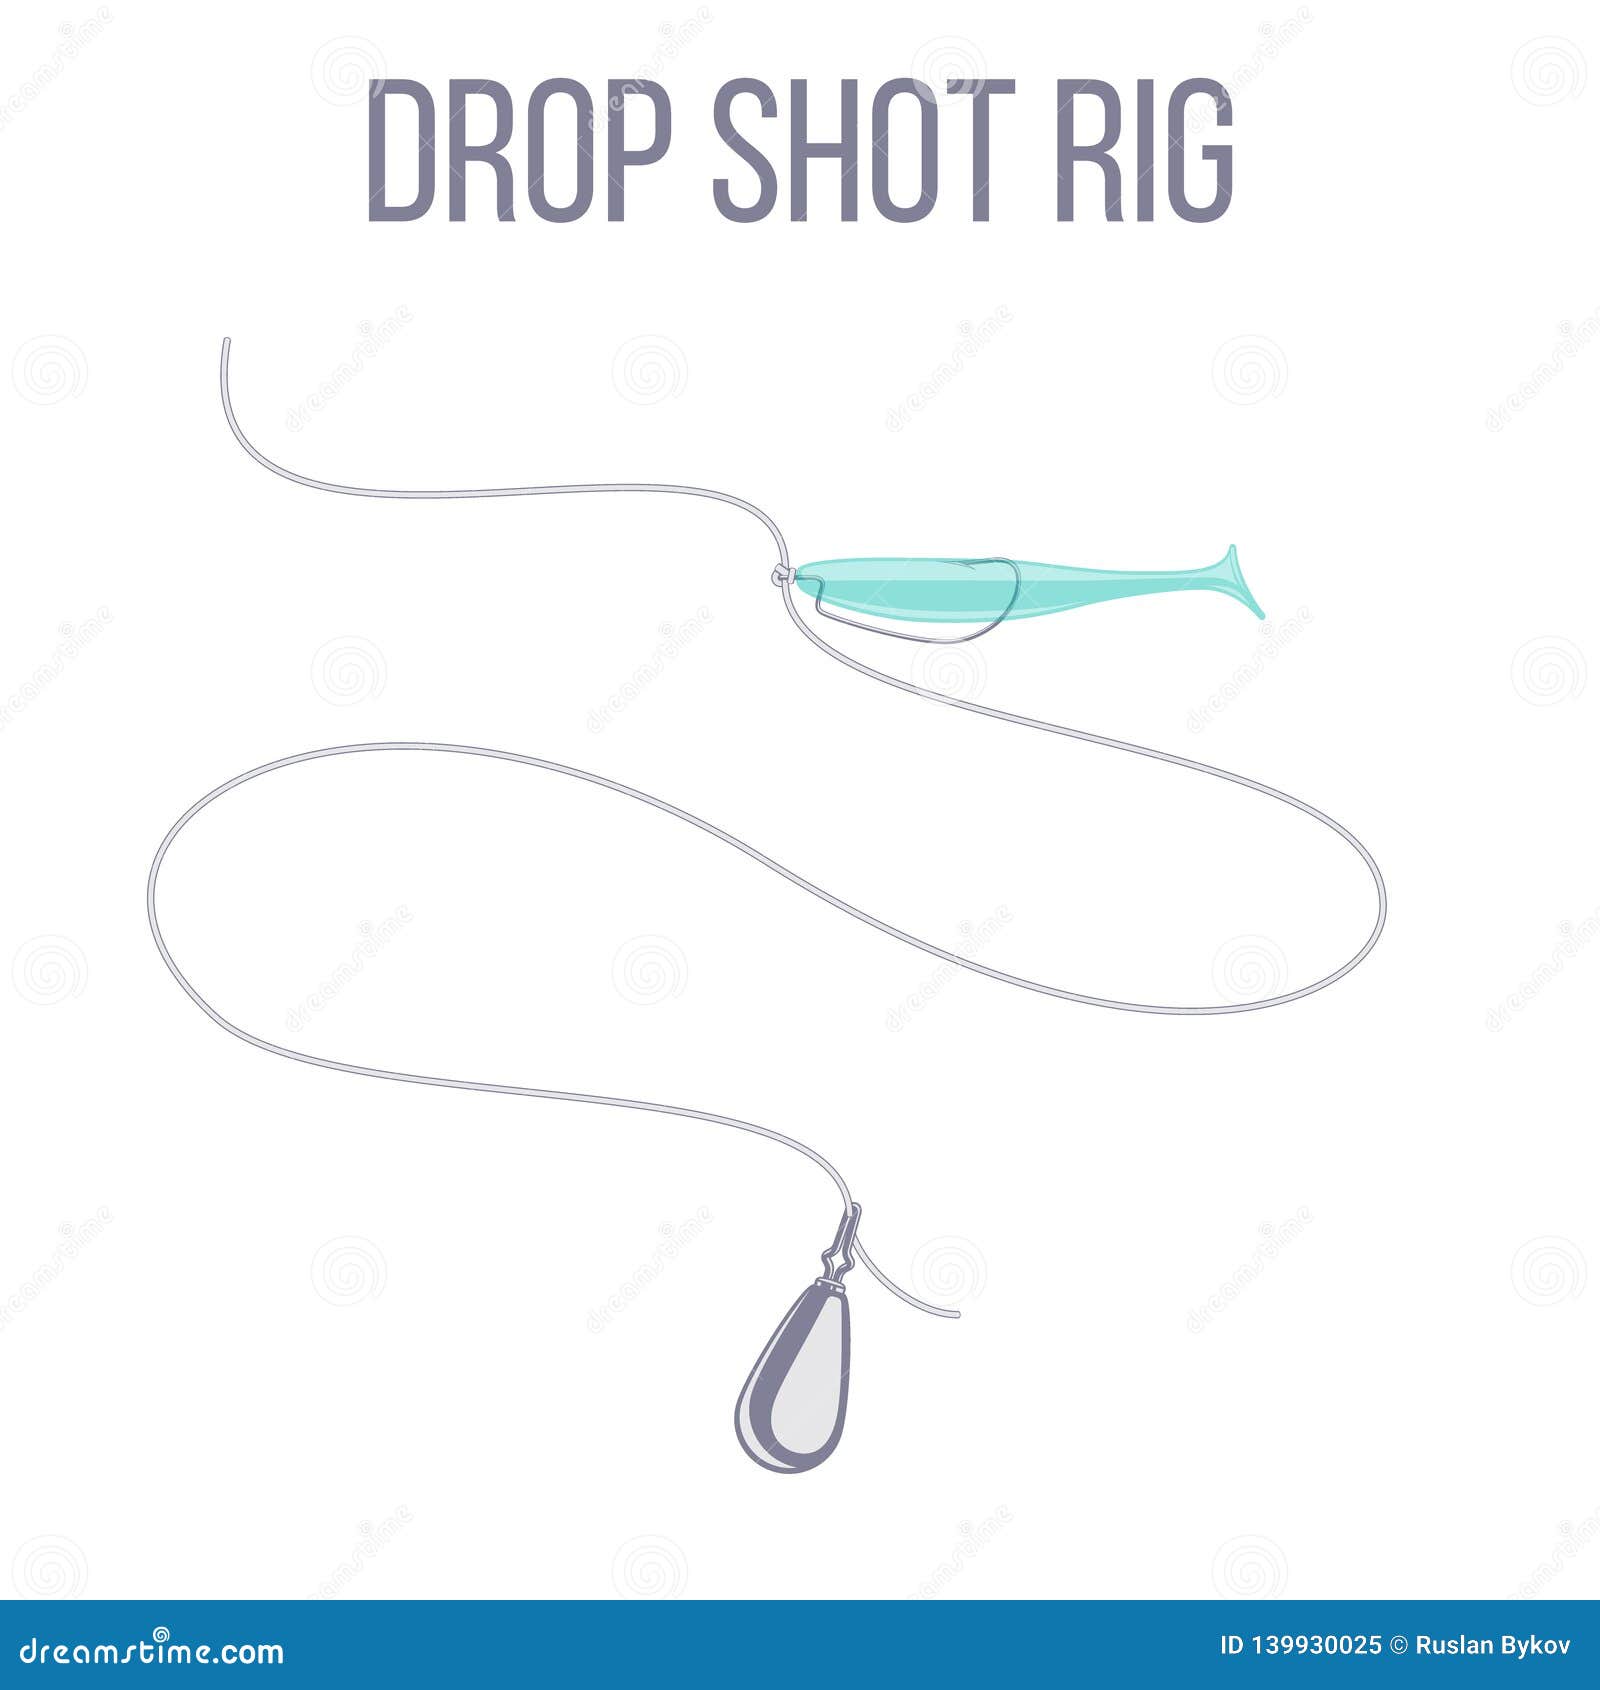 drop shot rig sinker and soft plastic lure bait setup for catching predatory fish.